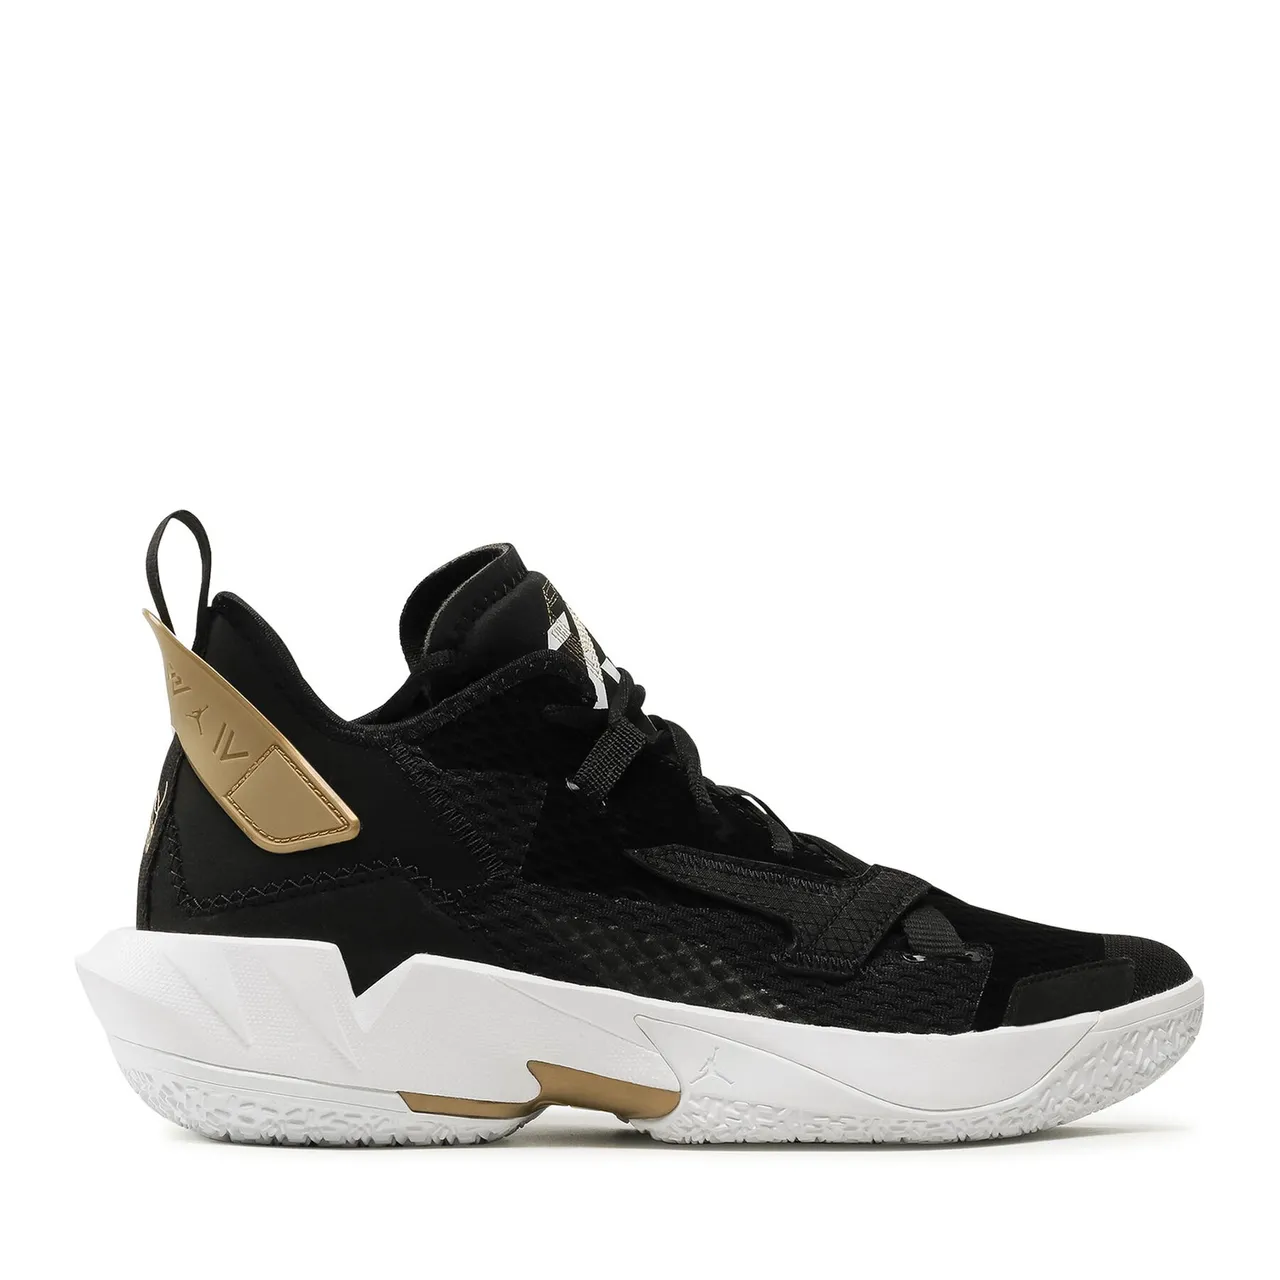 Schuhe Nike Why Not Zero.4 CQ4230 001 Black/White/Metallic Gold